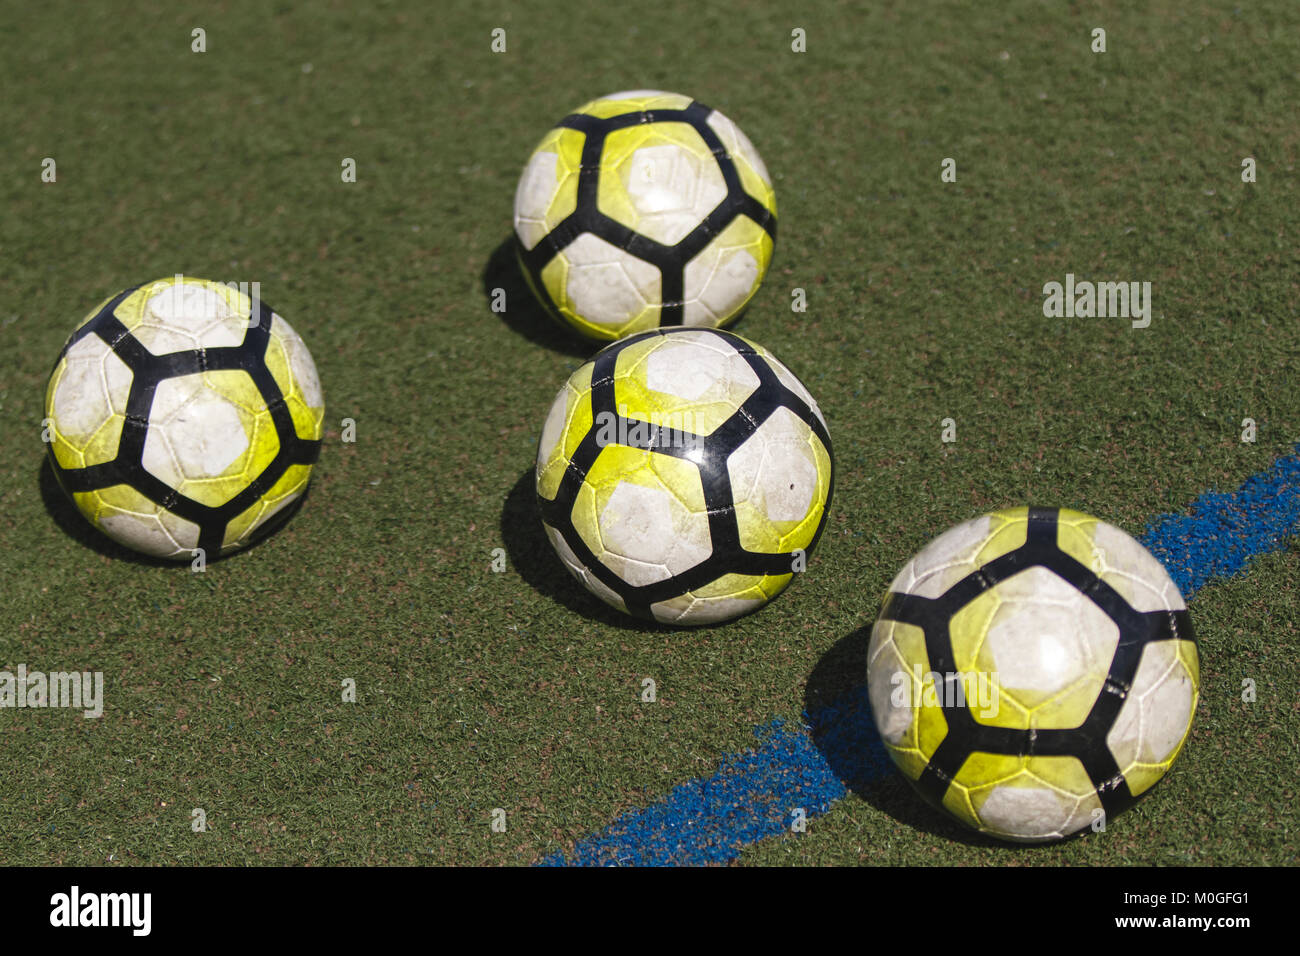 soccer / football ball Stock Photo